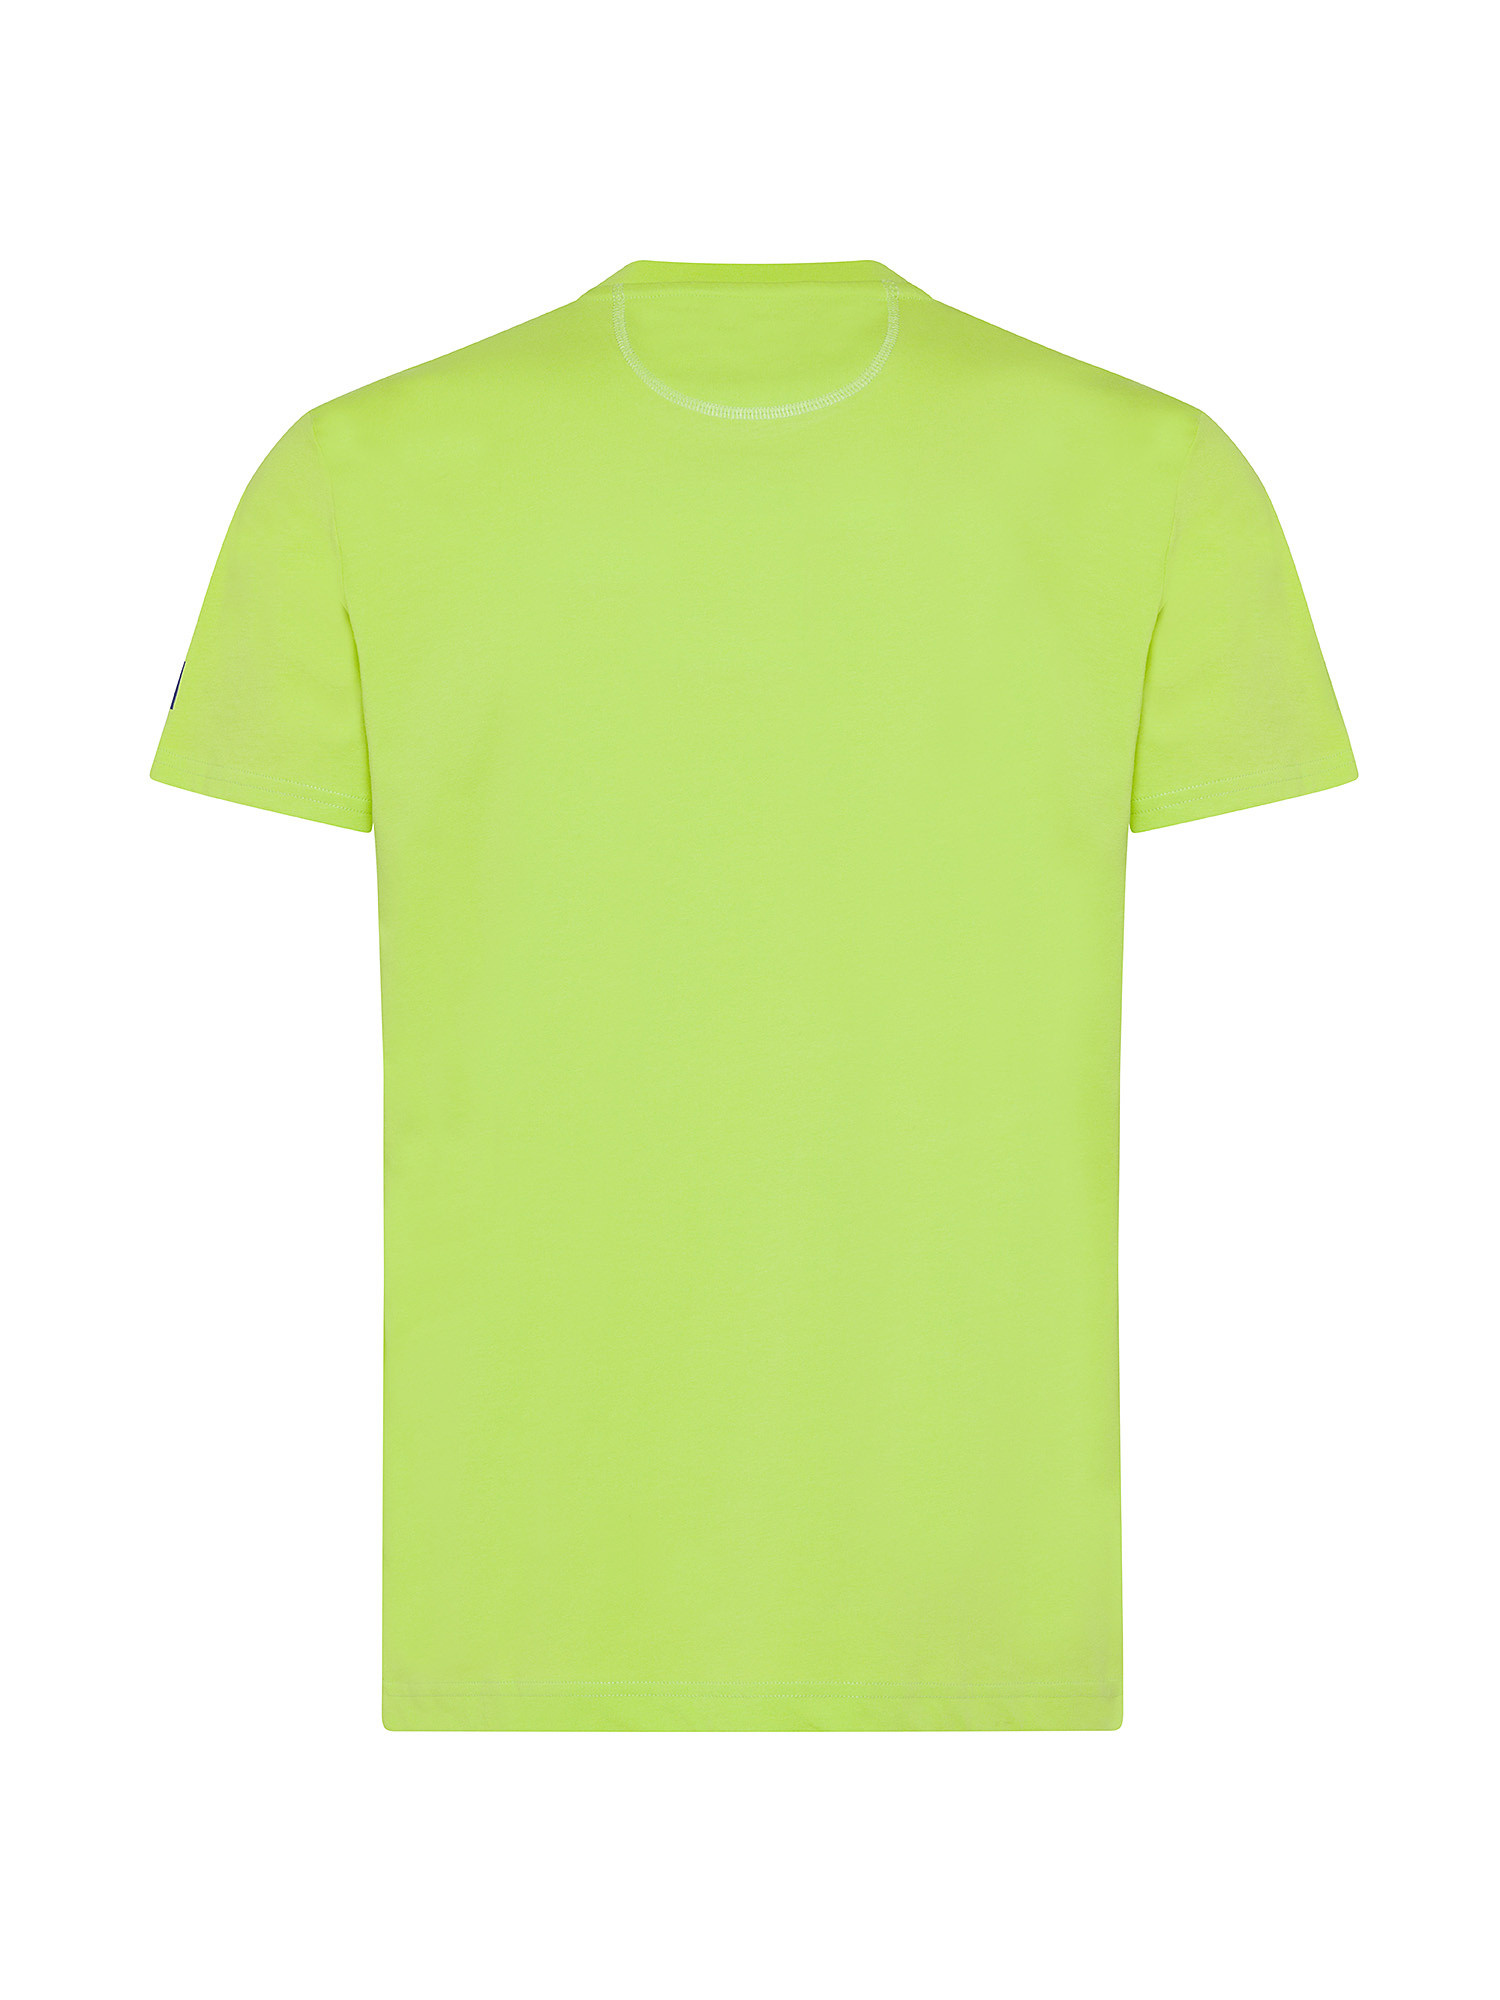 La Martina - T-shirt maniche corte in cotone jersey, Giallo, large image number 1